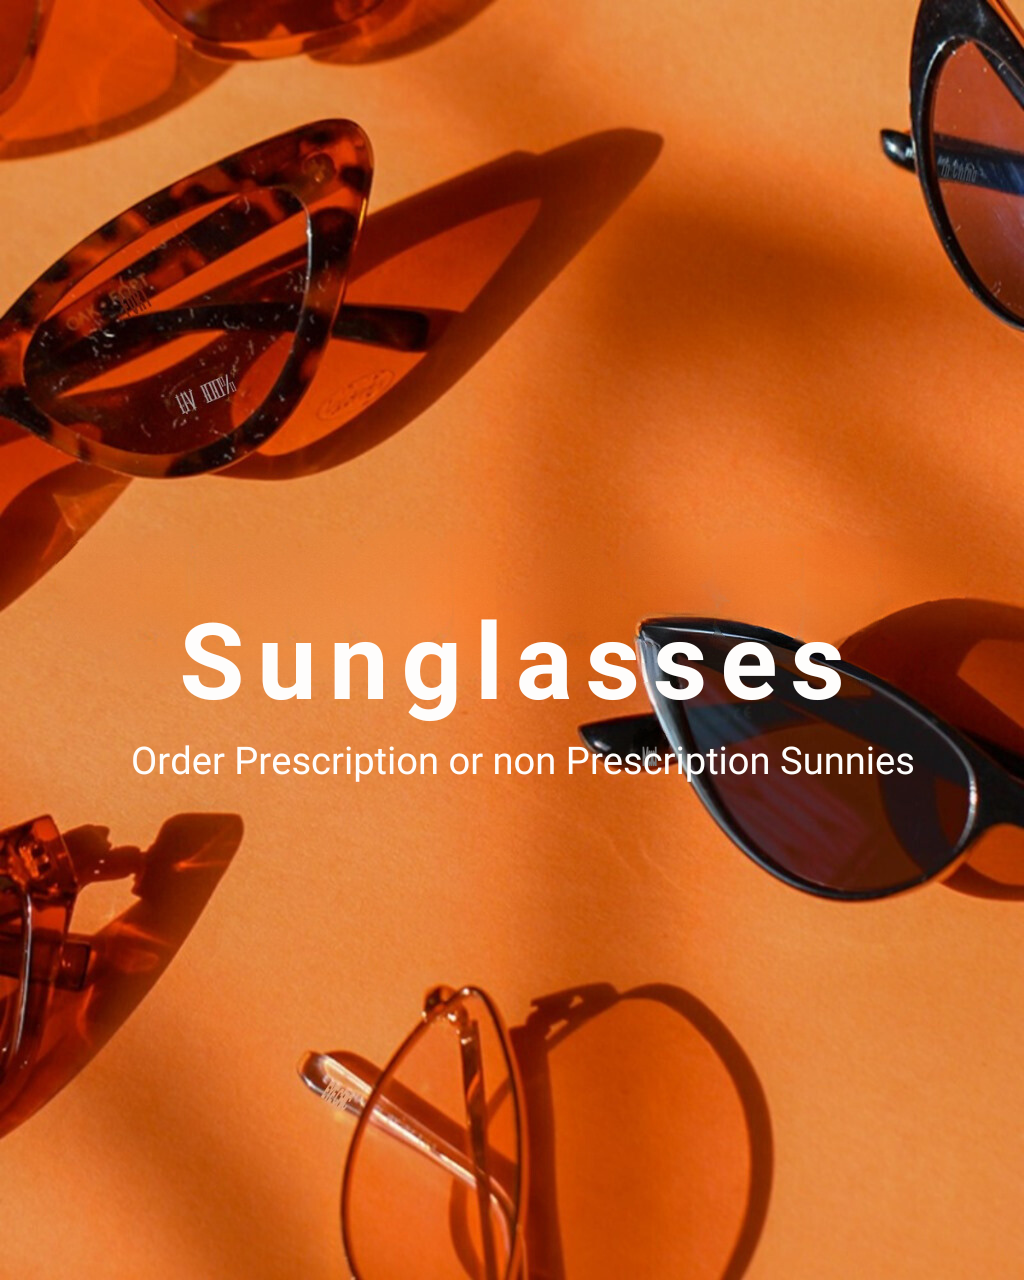 eyecatching glasses store - UK Glasses Stylish Prescription Safety Glasses filter glasses